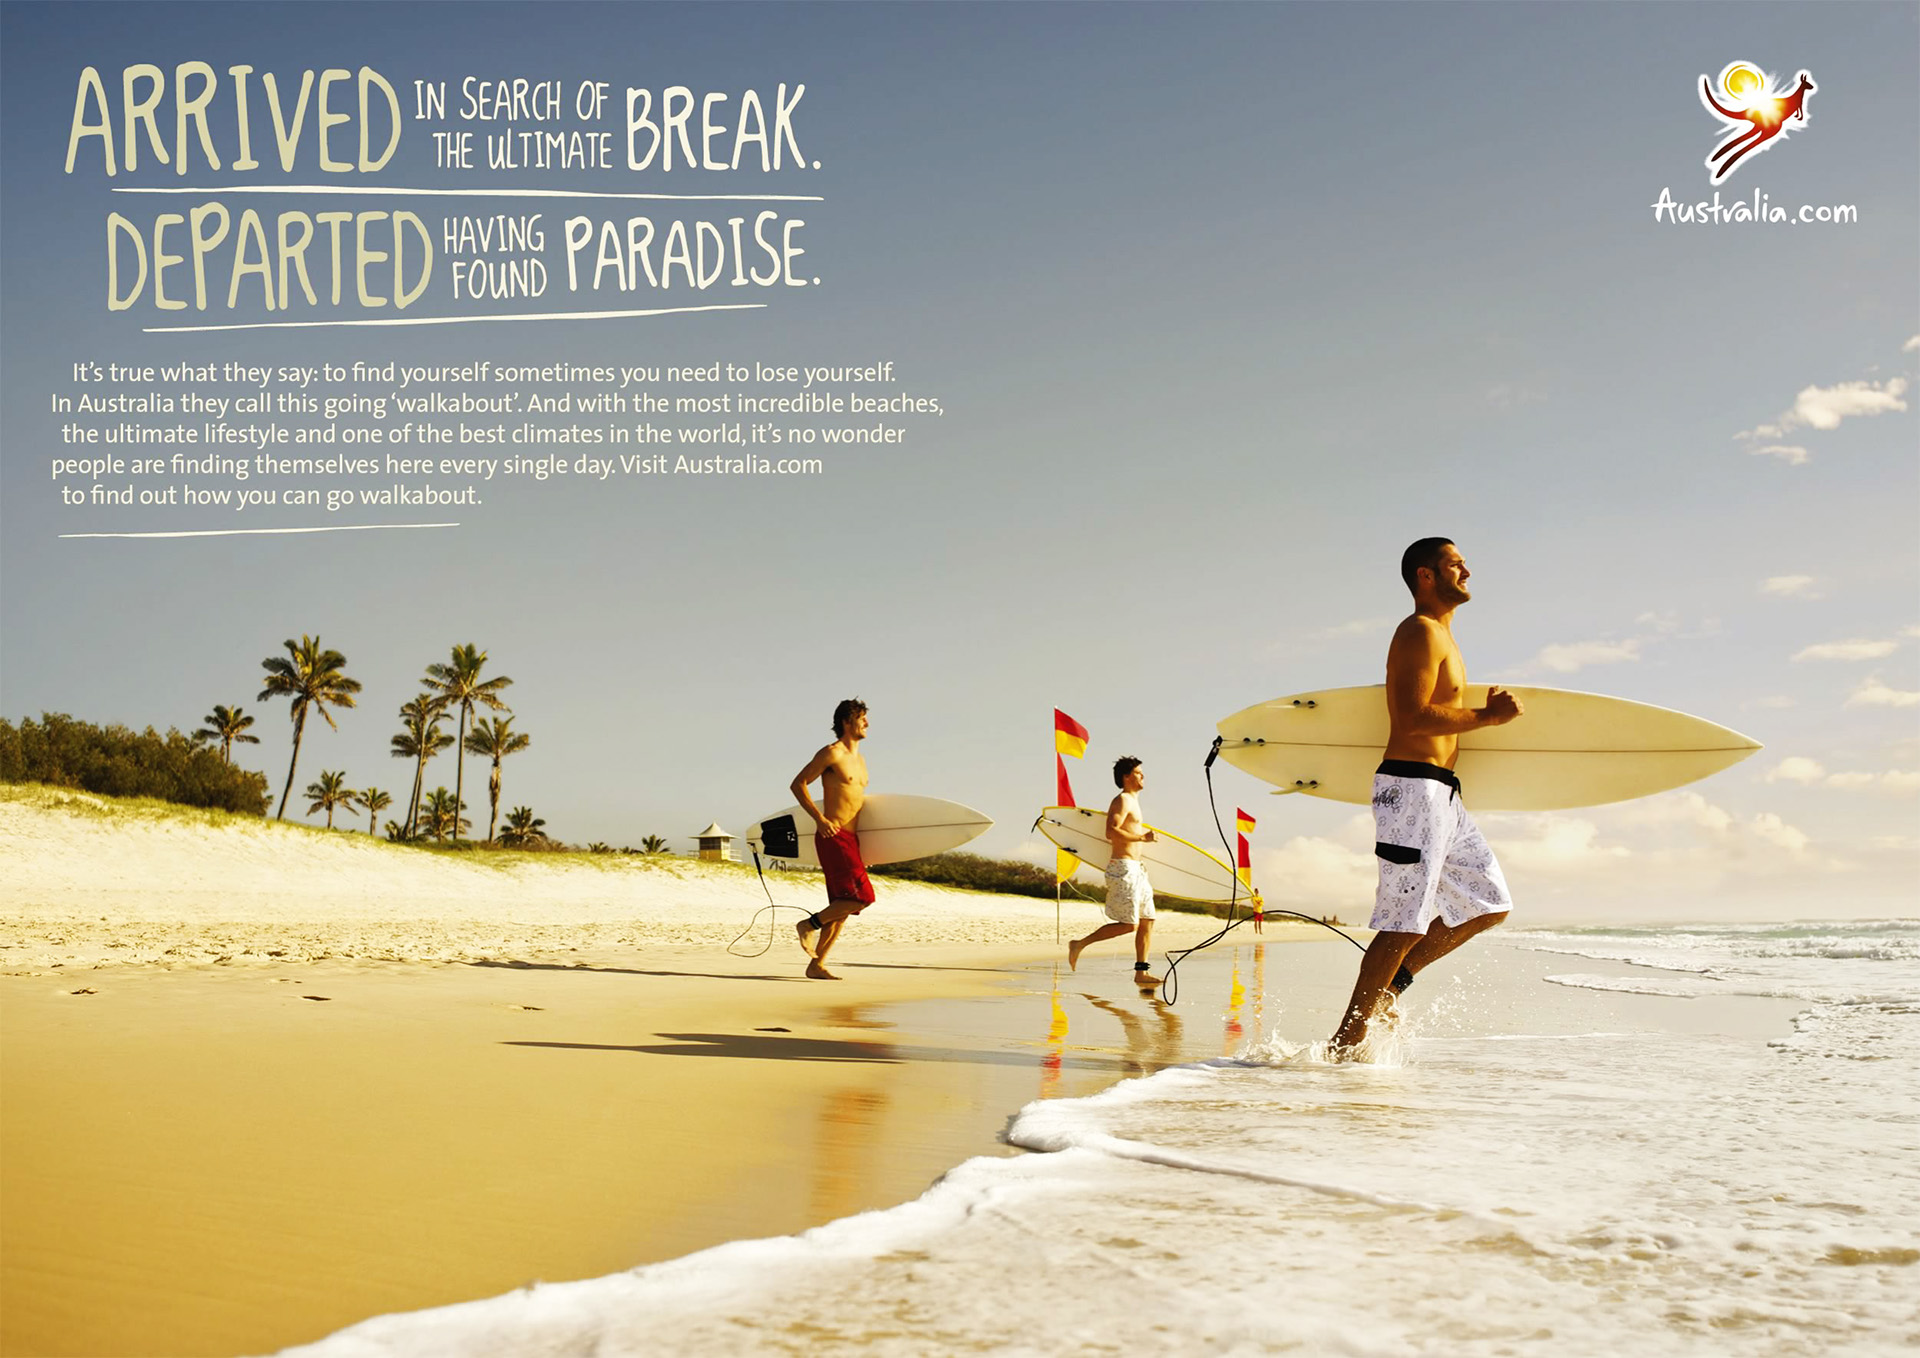 This is your destination. Креативная реклама путешествий. Реклама туризма. Креативная реклама пляж. Реклама пляжа.